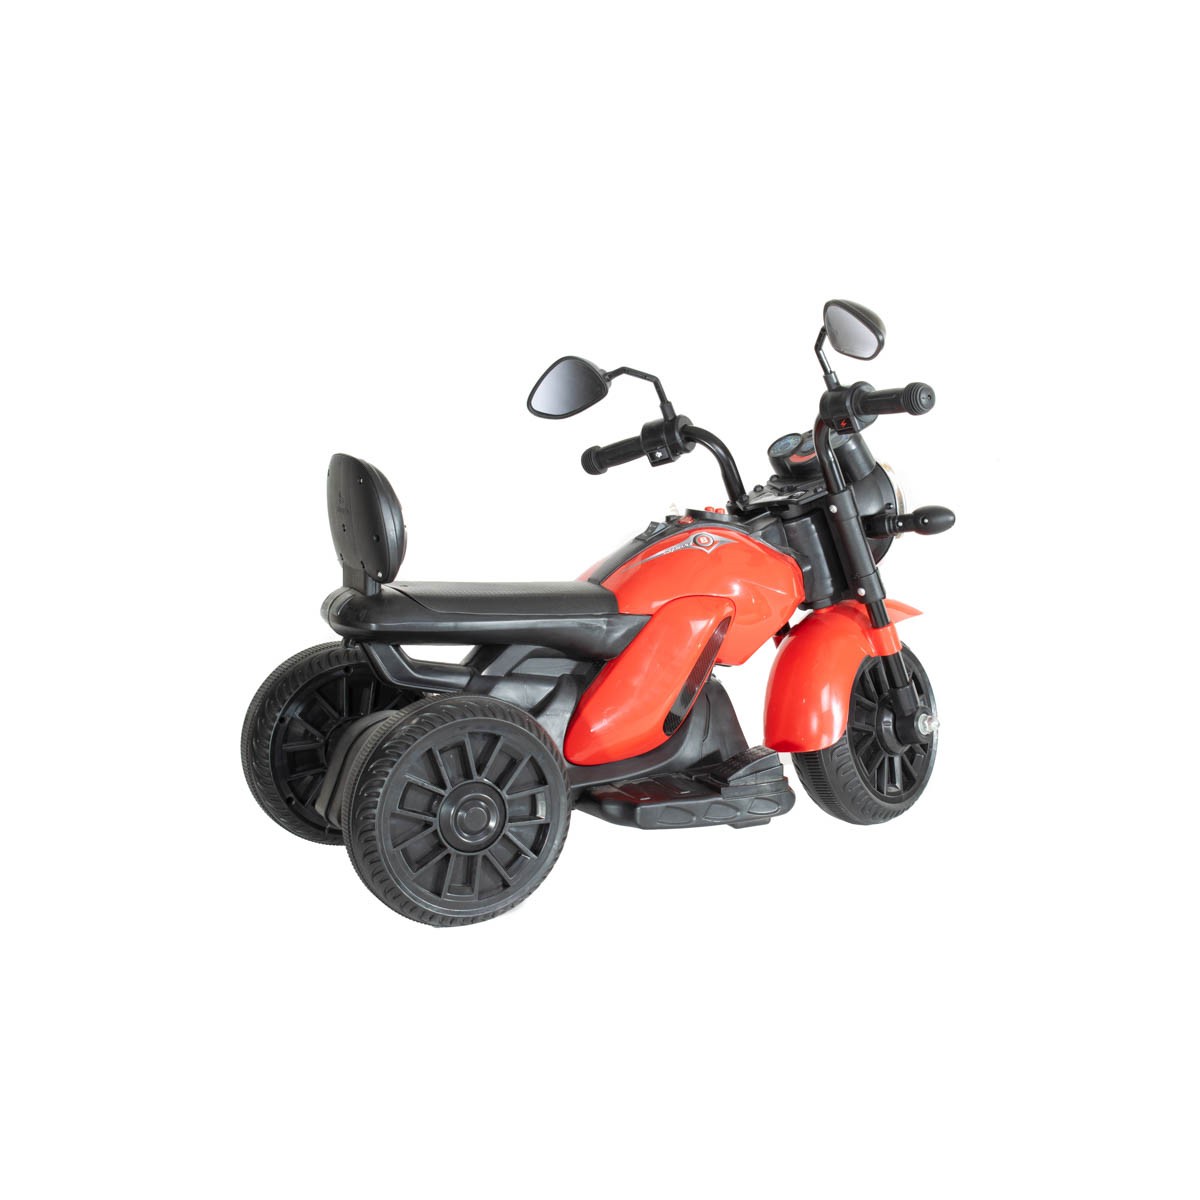  GC Global Direct 6 V batería niños paseo en moto 3 ruedas w/luz  de color opt : Bebés